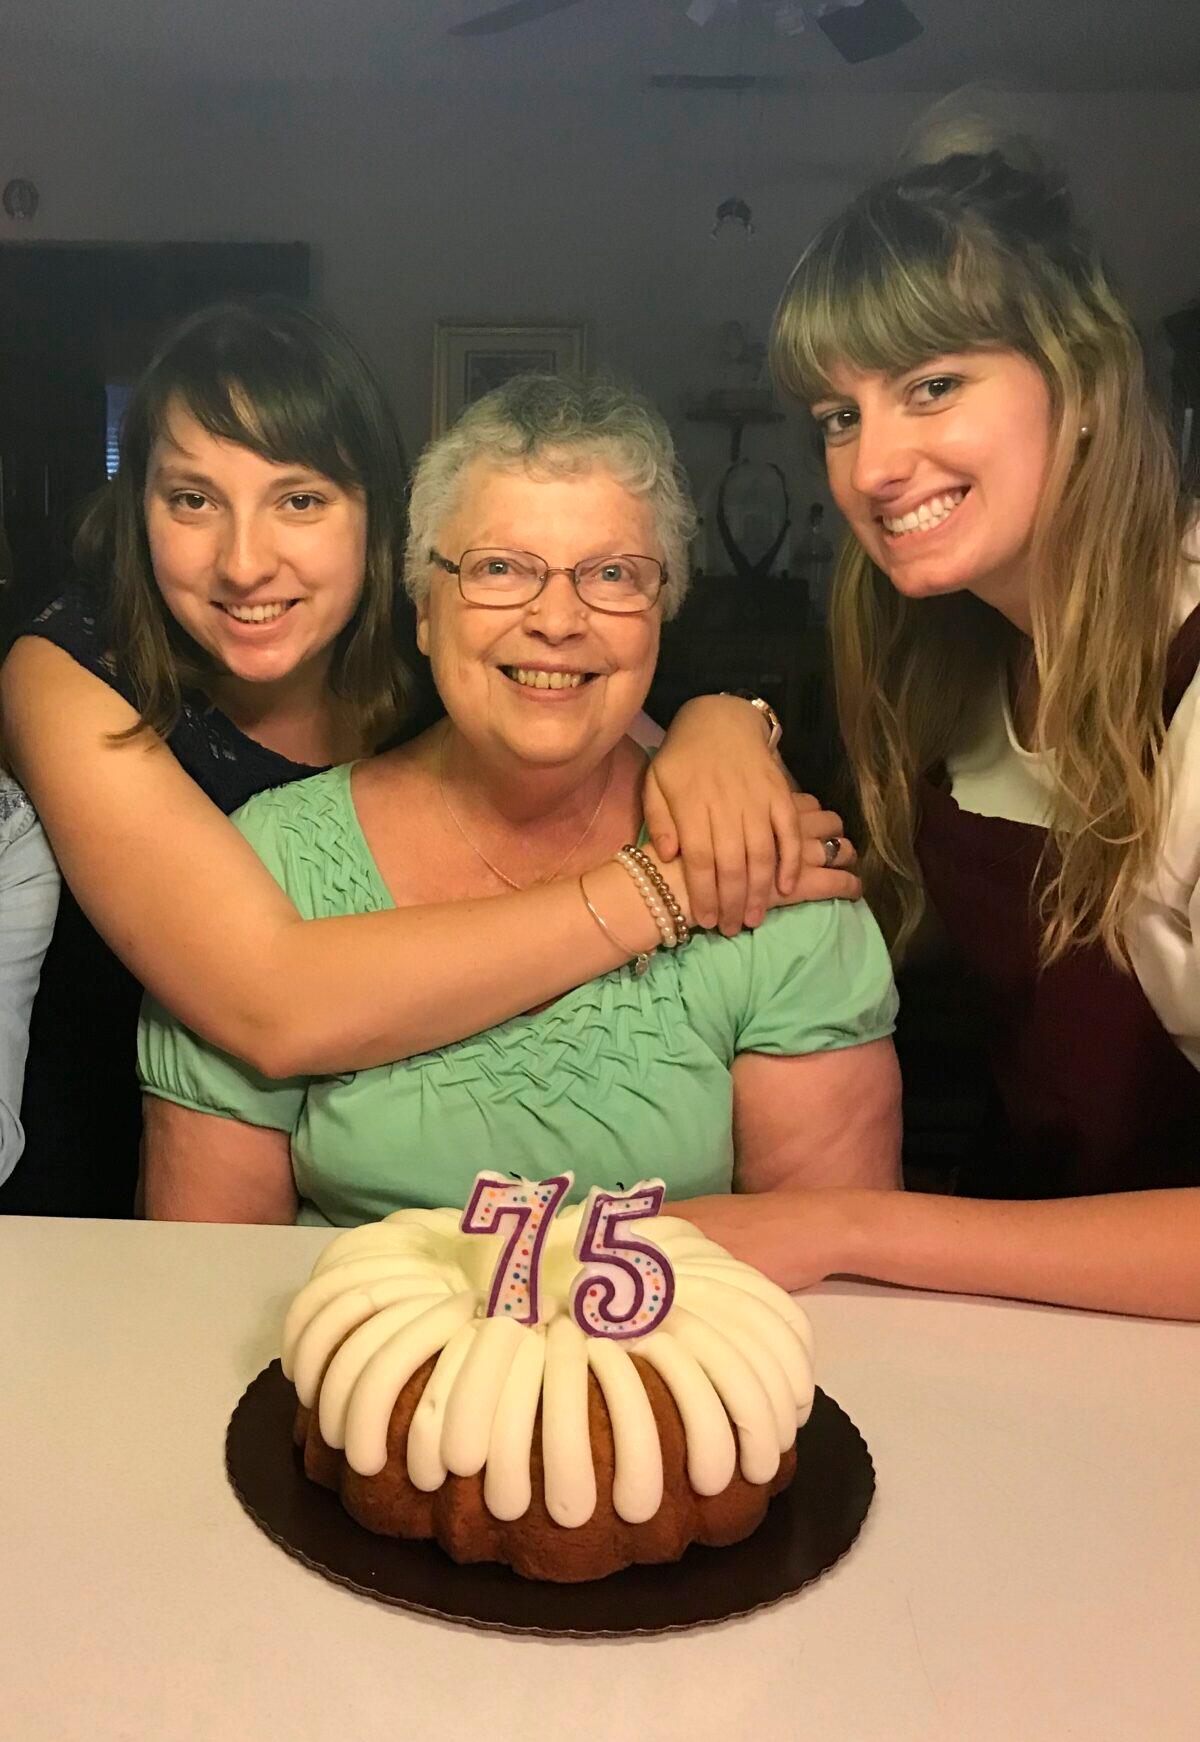 Megan Hockman, her grandmother Eleanor Raguse and sister Kayla Hockman pose with a birthday cake for Raguse in Fontana, Calif., on June 3, 2018. (Lori Hockman via AP)